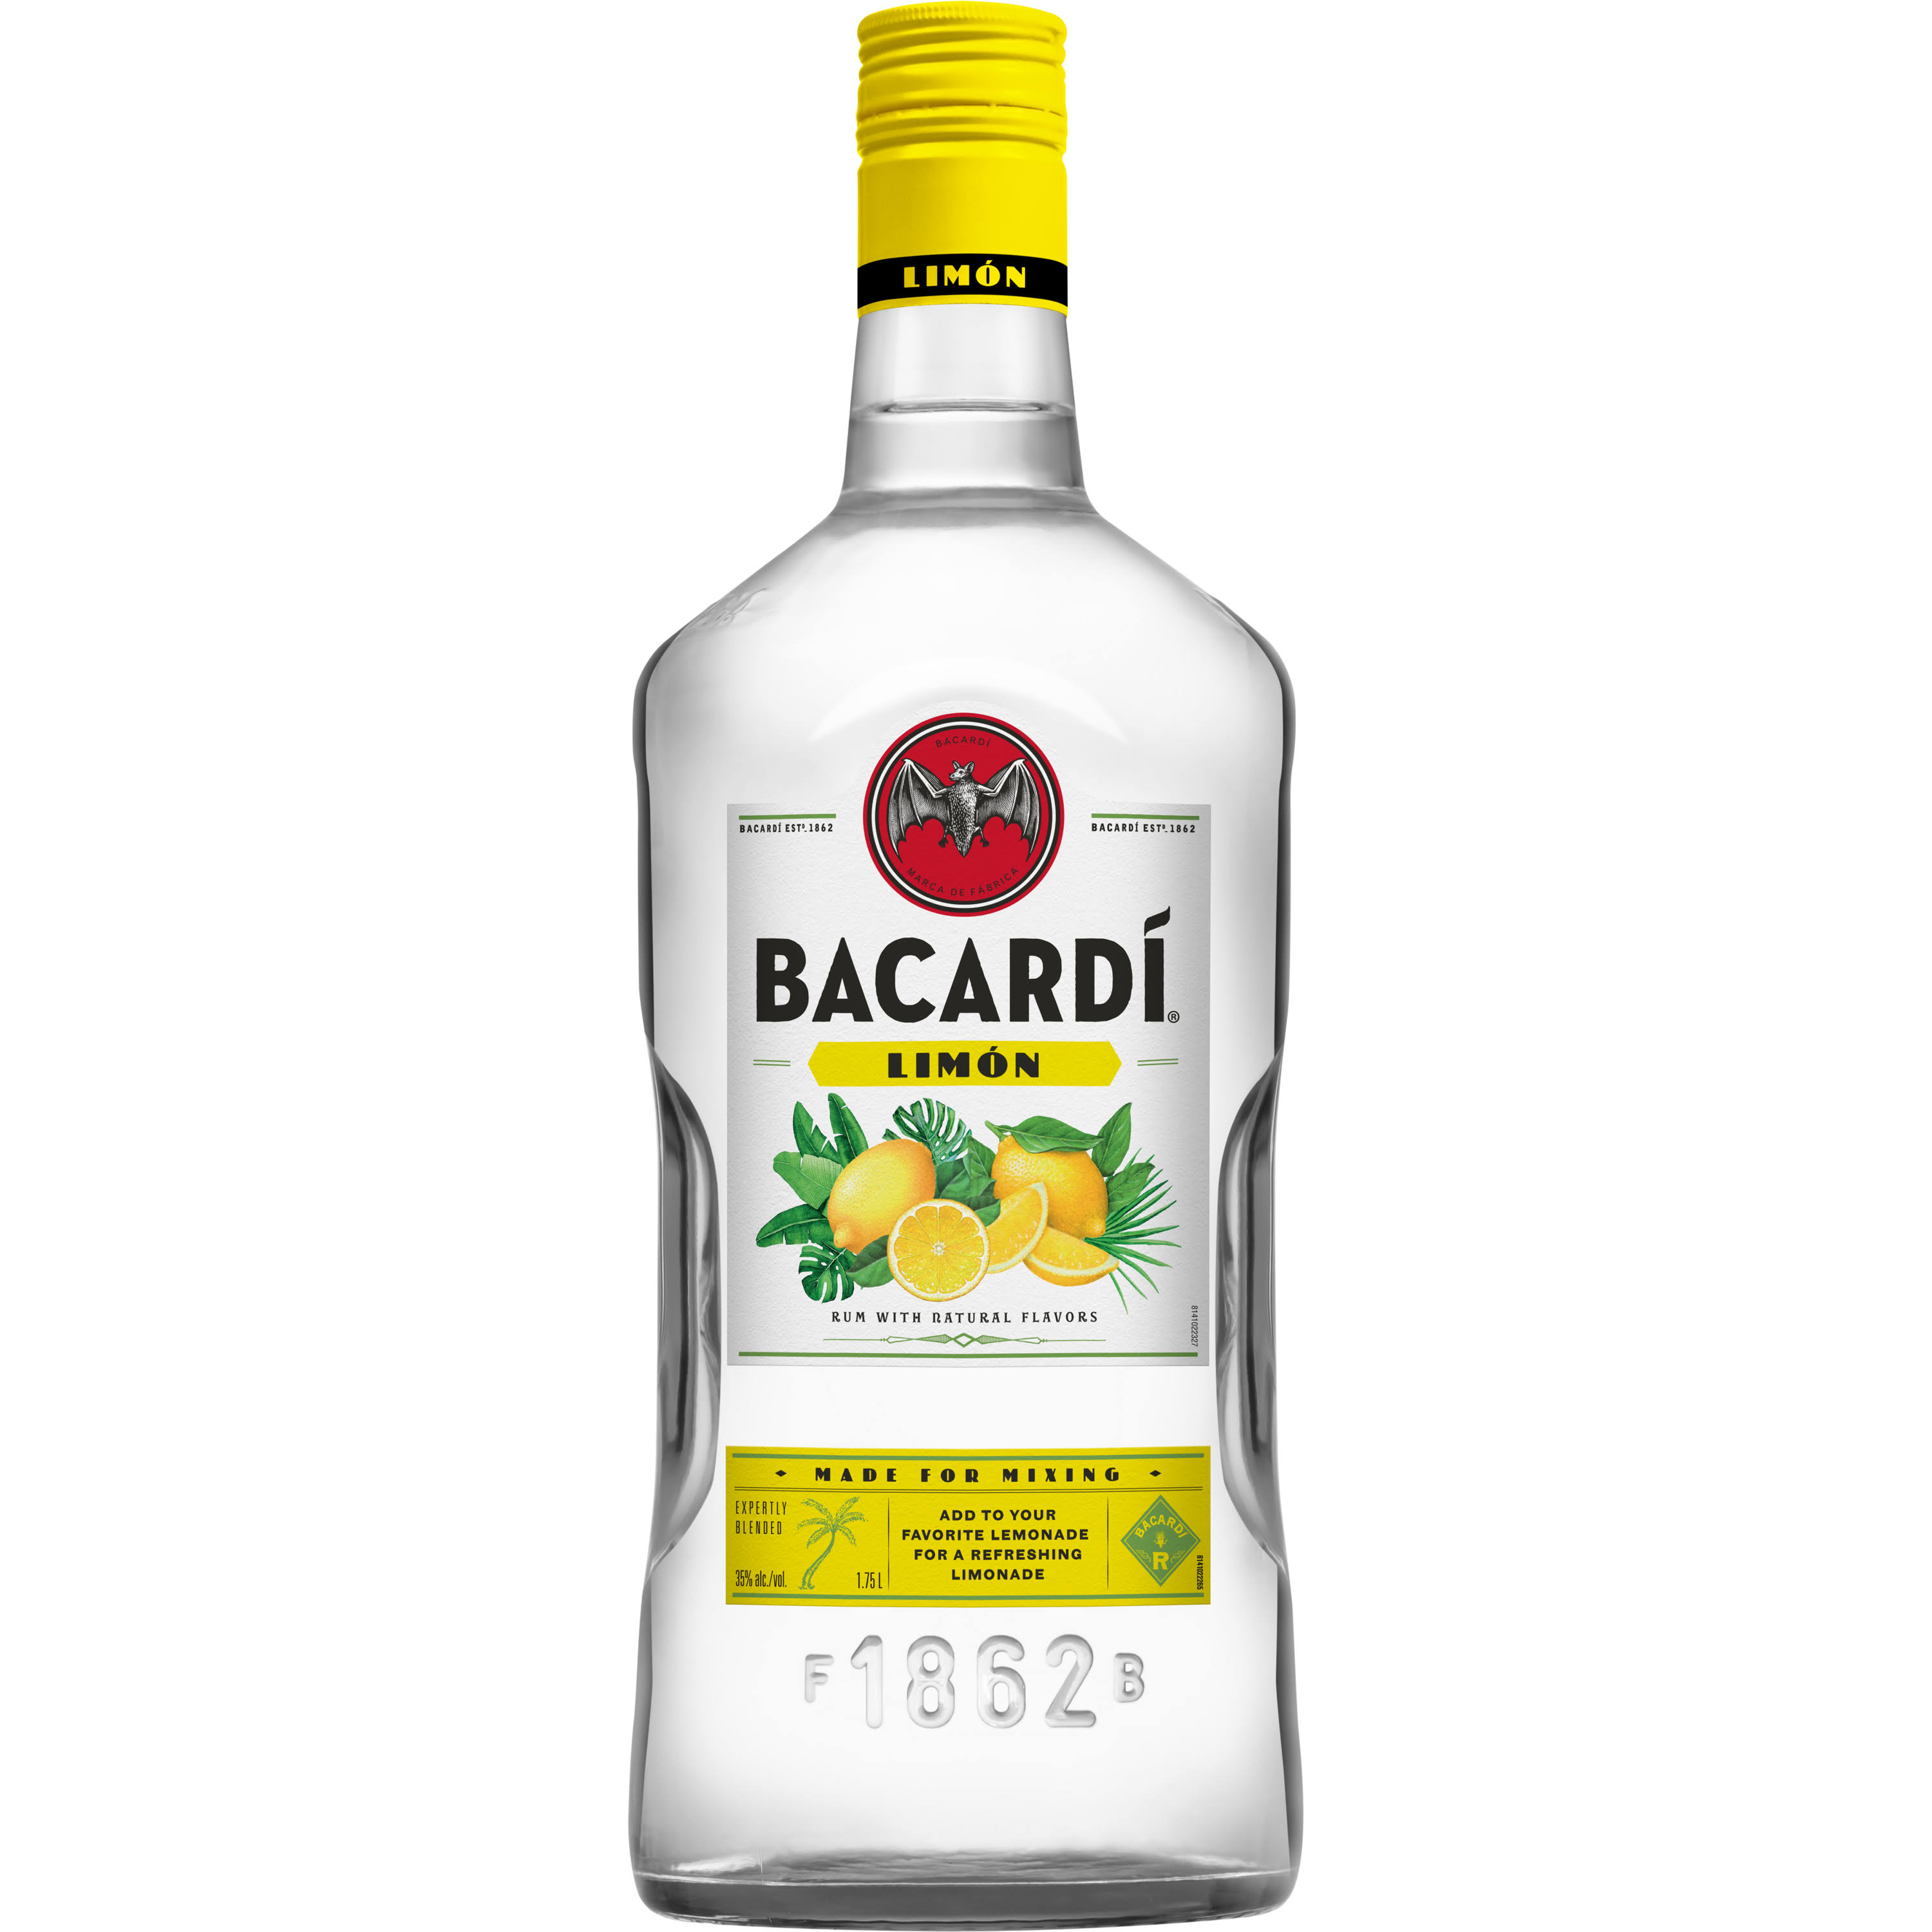 Bacardi Rum, Limon - 1.75 lt